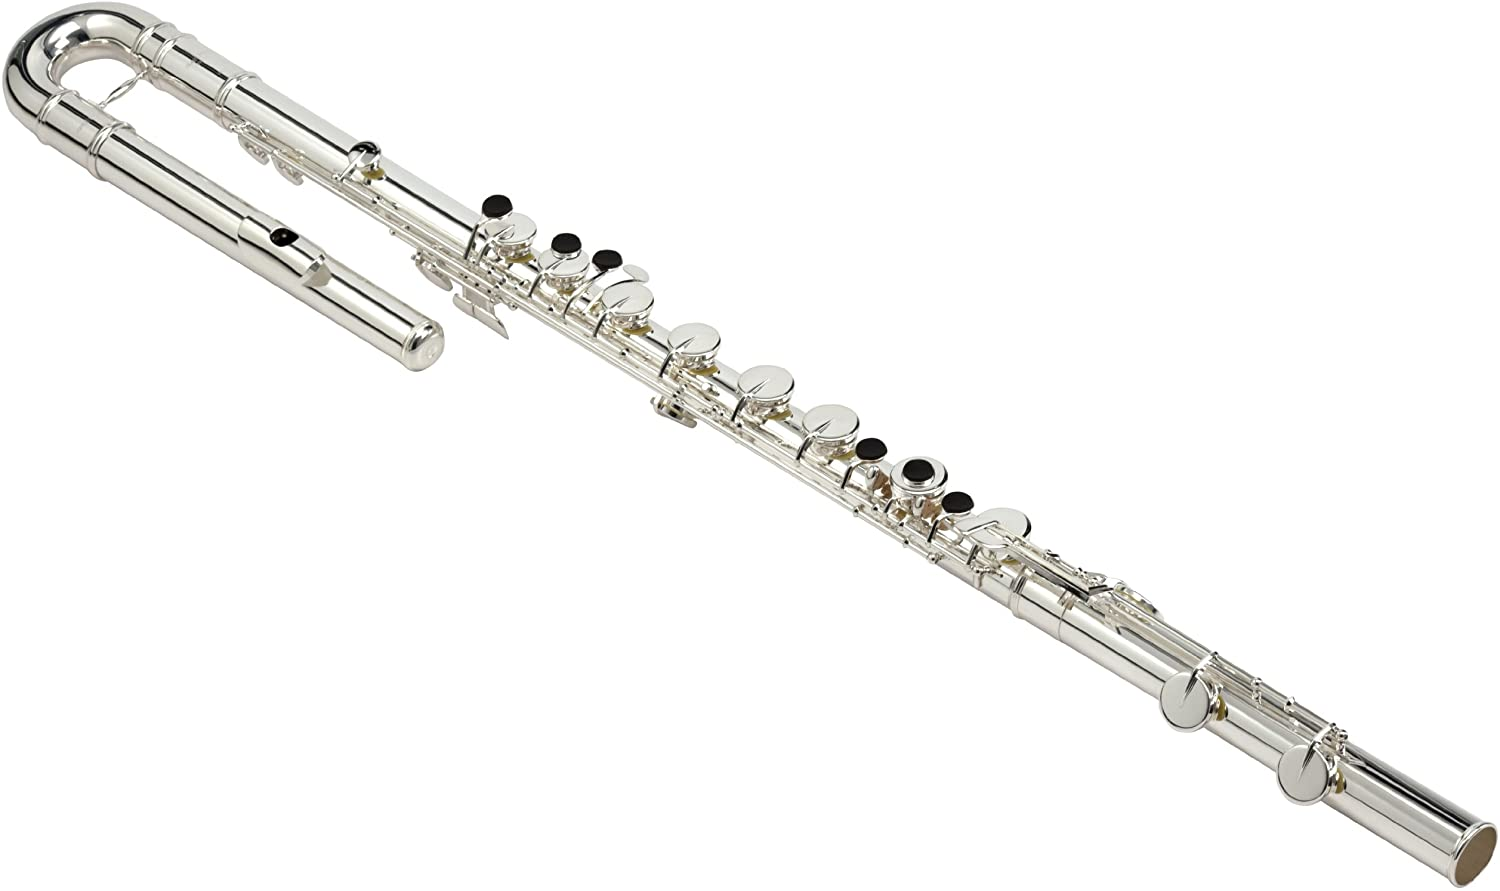 Bass flute transposition